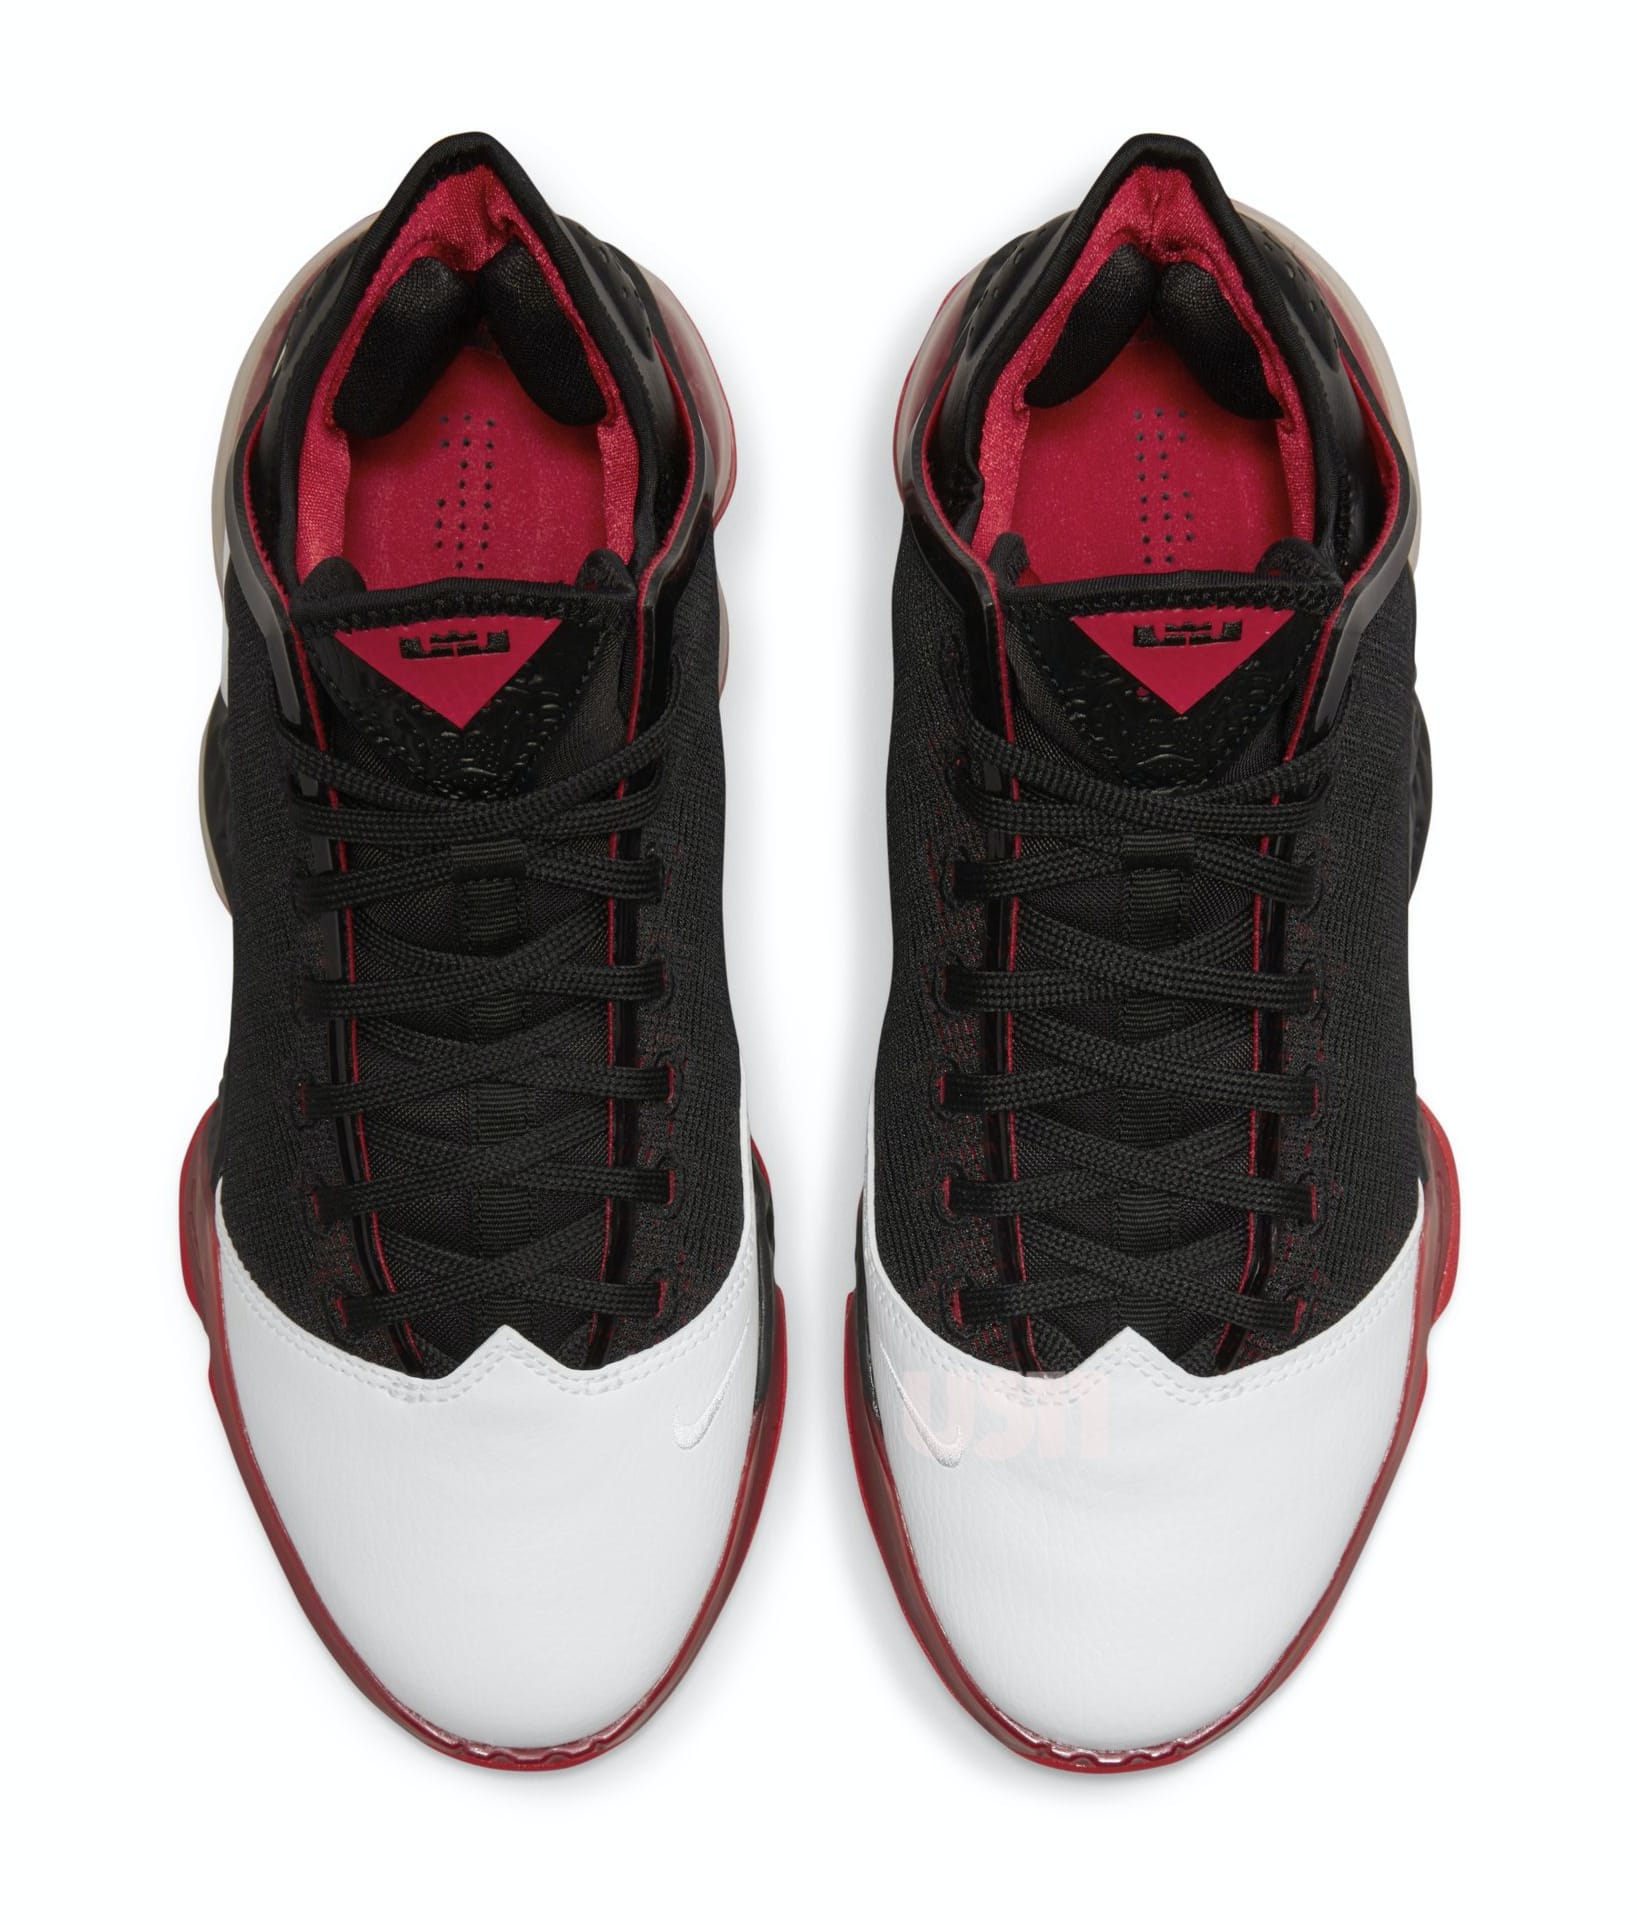 Black Toe Vibes Make Their Way Onto The Nike LeBron 19 Low - Sneaker News